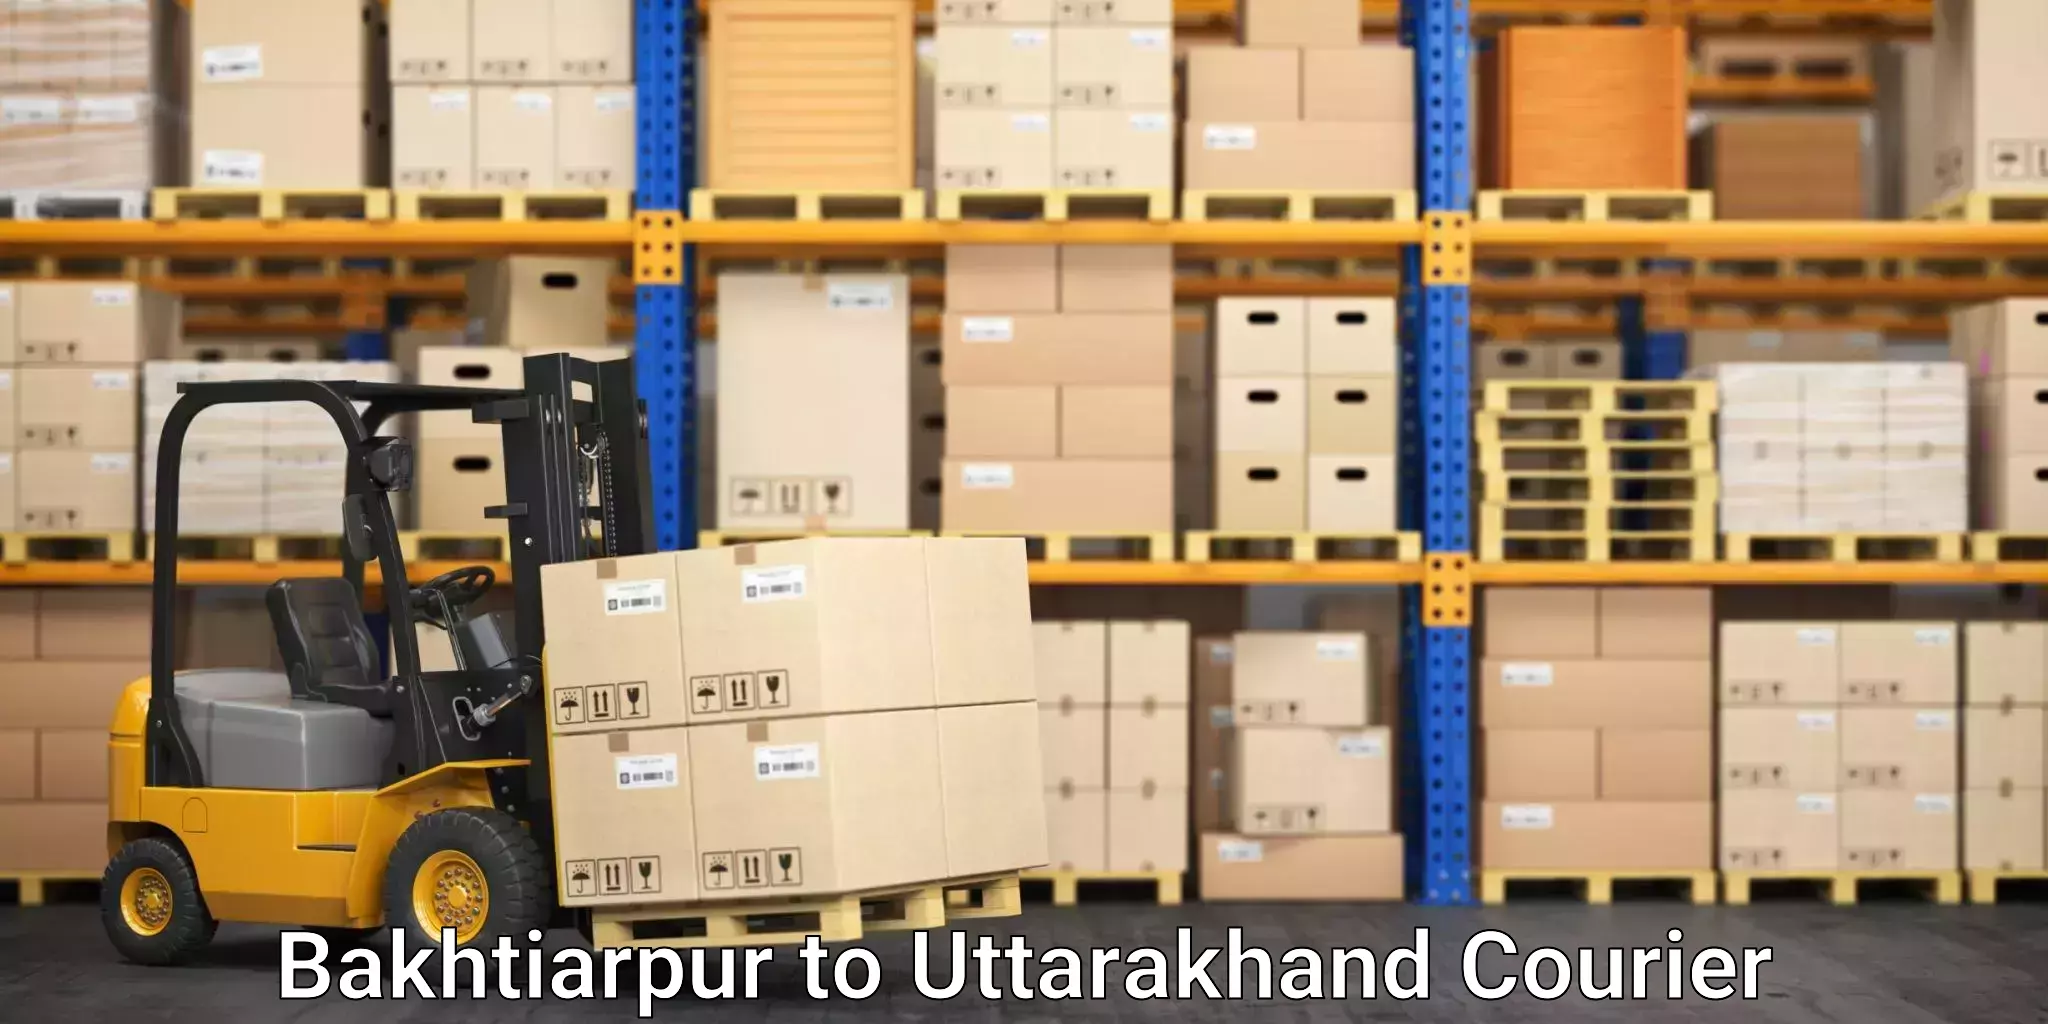 Furniture transport company Bakhtiarpur to Sitarganj